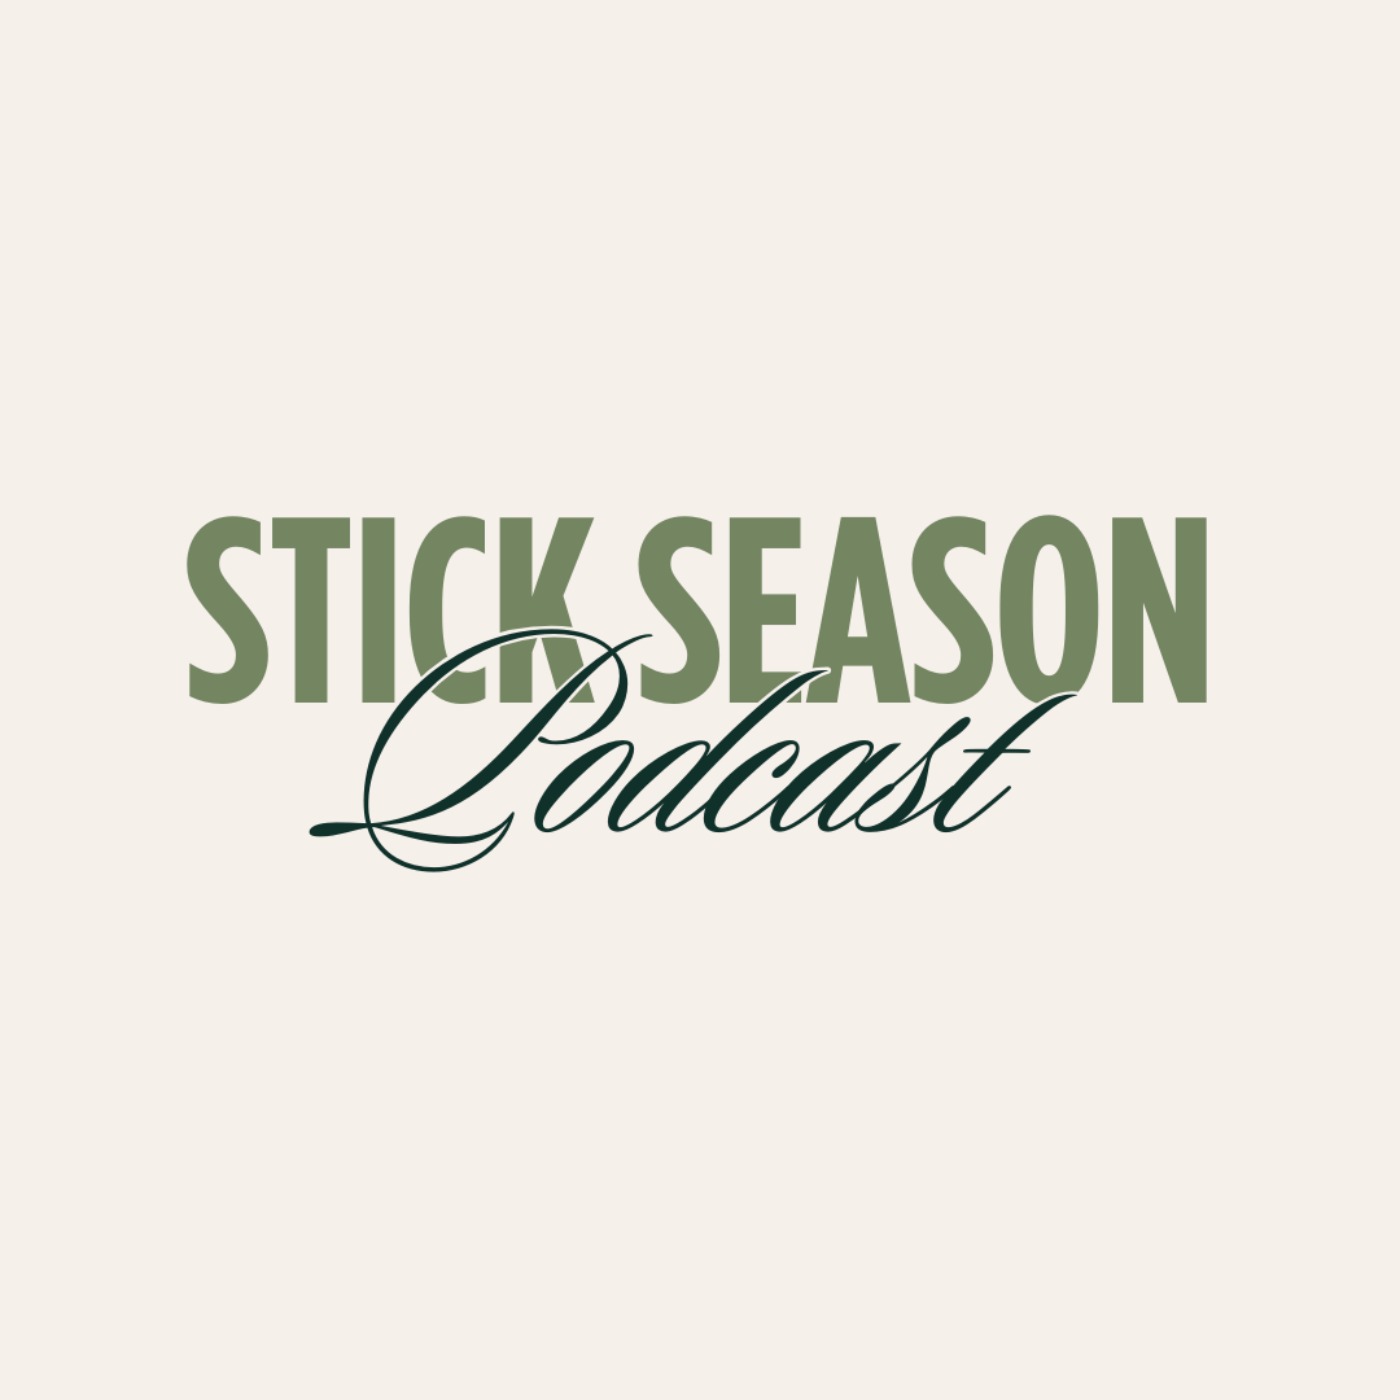 Stick Season Image